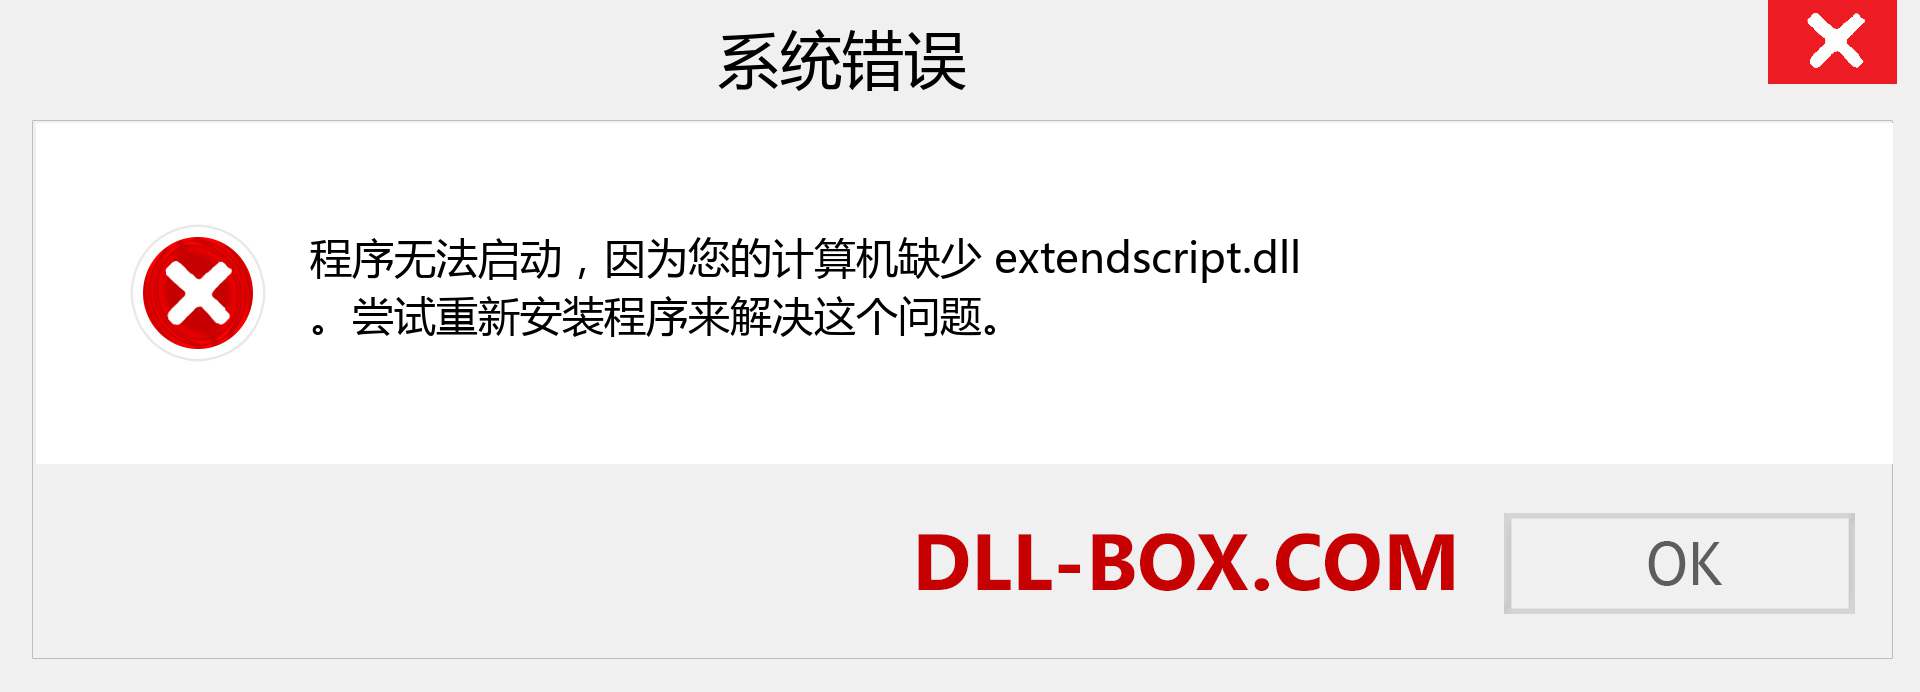 extendscript.dll 文件丢失？。 适用于 Windows 7、8、10 的下载 - 修复 Windows、照片、图像上的 extendscript dll 丢失错误